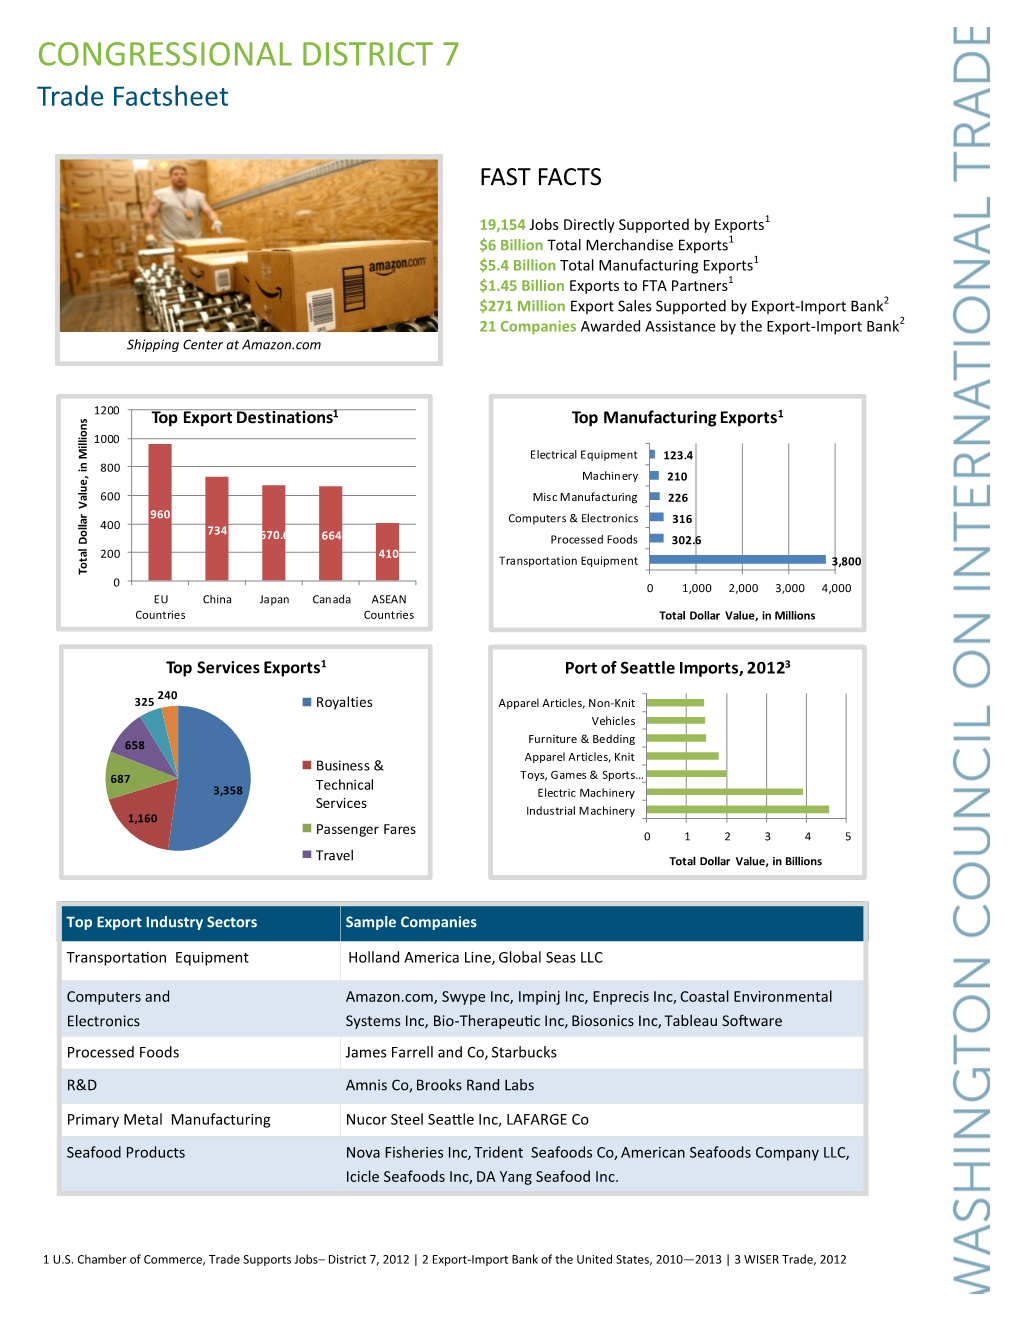 CONGRESSIONAL DISTRICT 7 Trade Factsheet